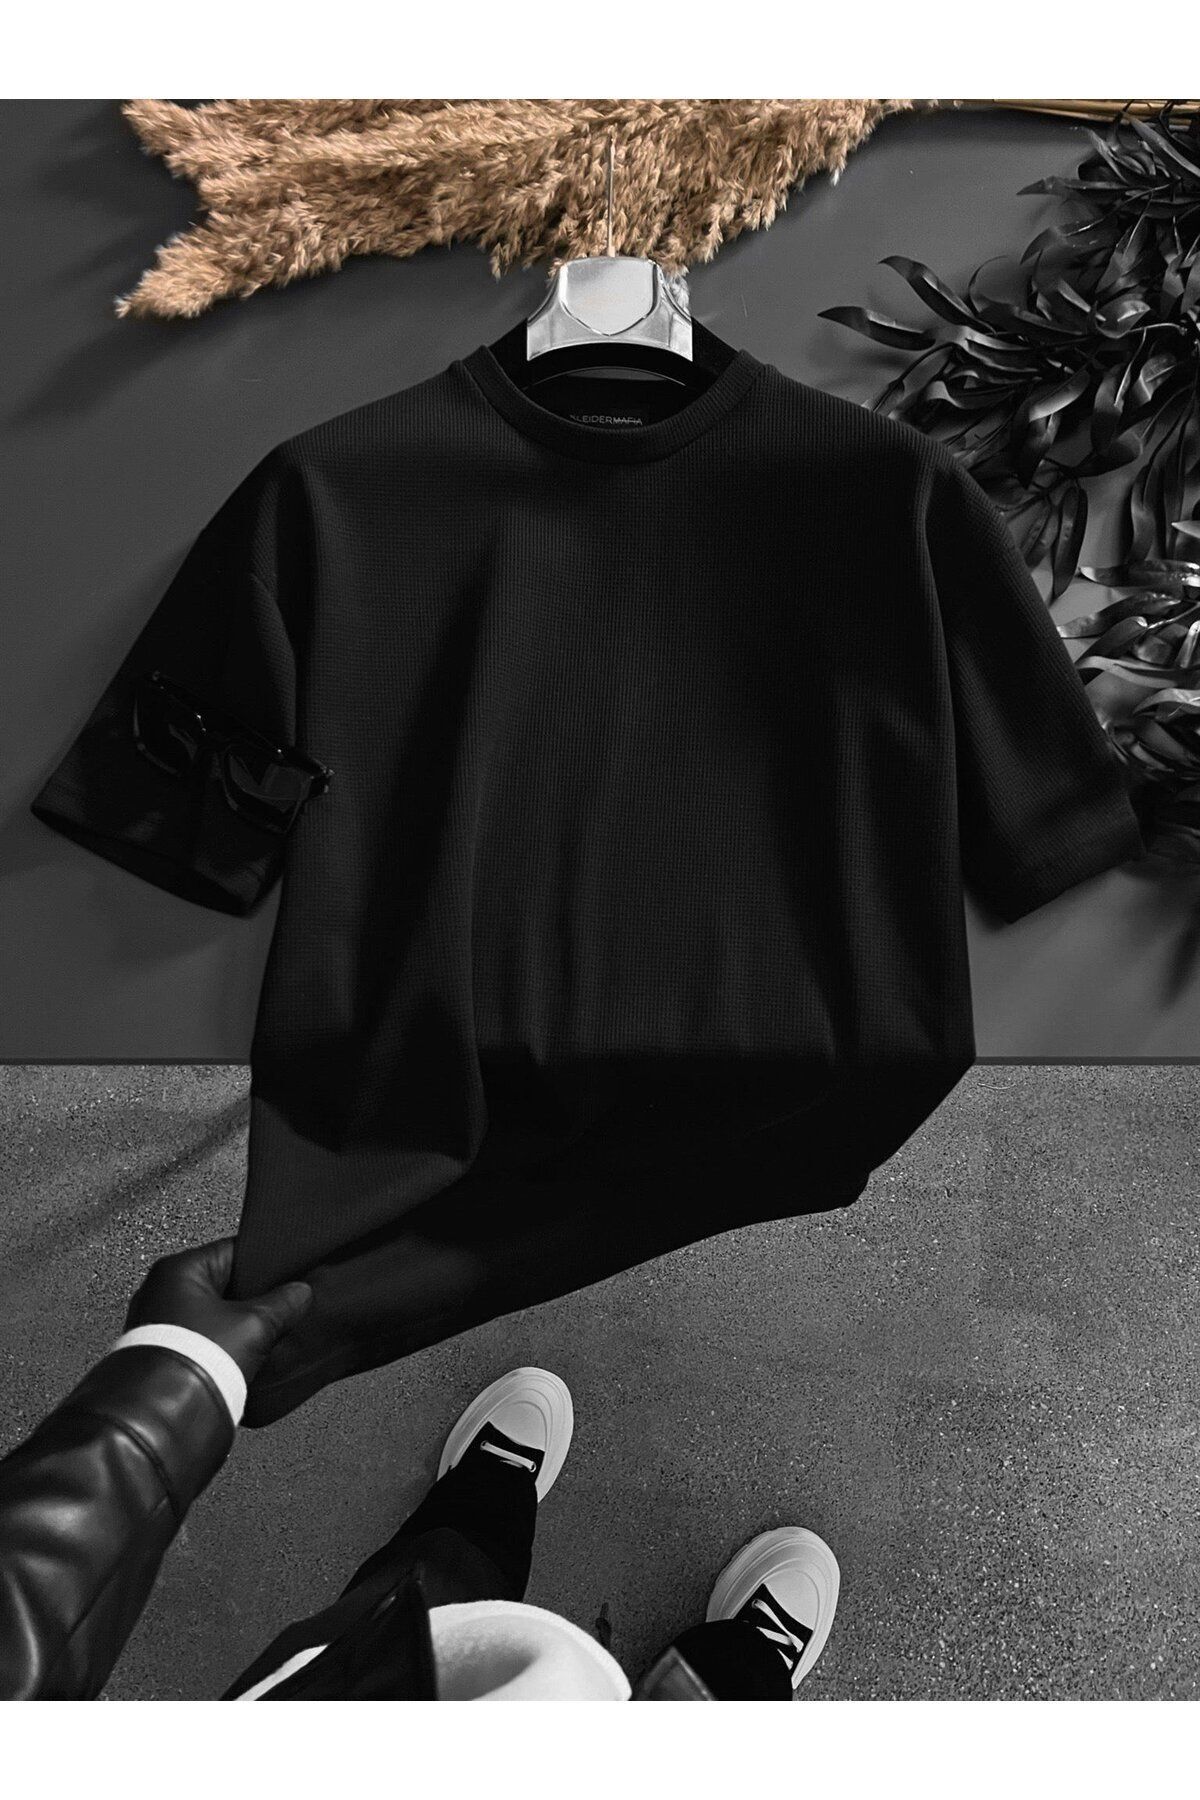 ablukaonline Long Fit Dokulu Basic T-shirt Siyah